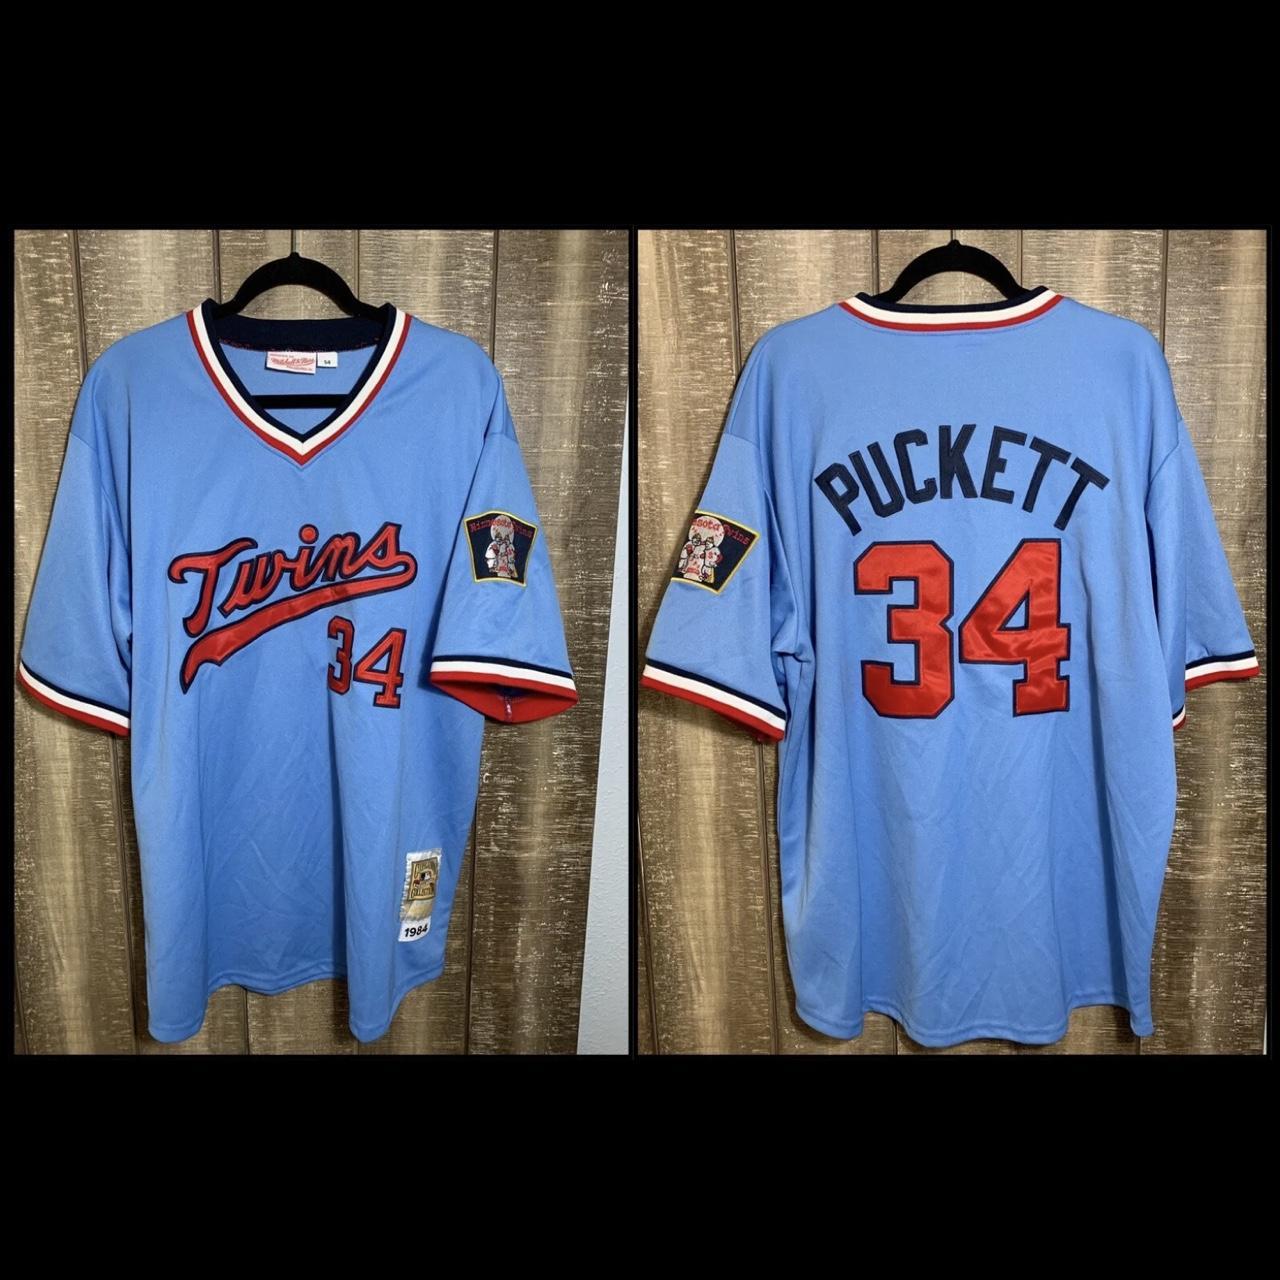 Authentic Jersey Minnesota Twins 1984 Kirby Puckett - Shop